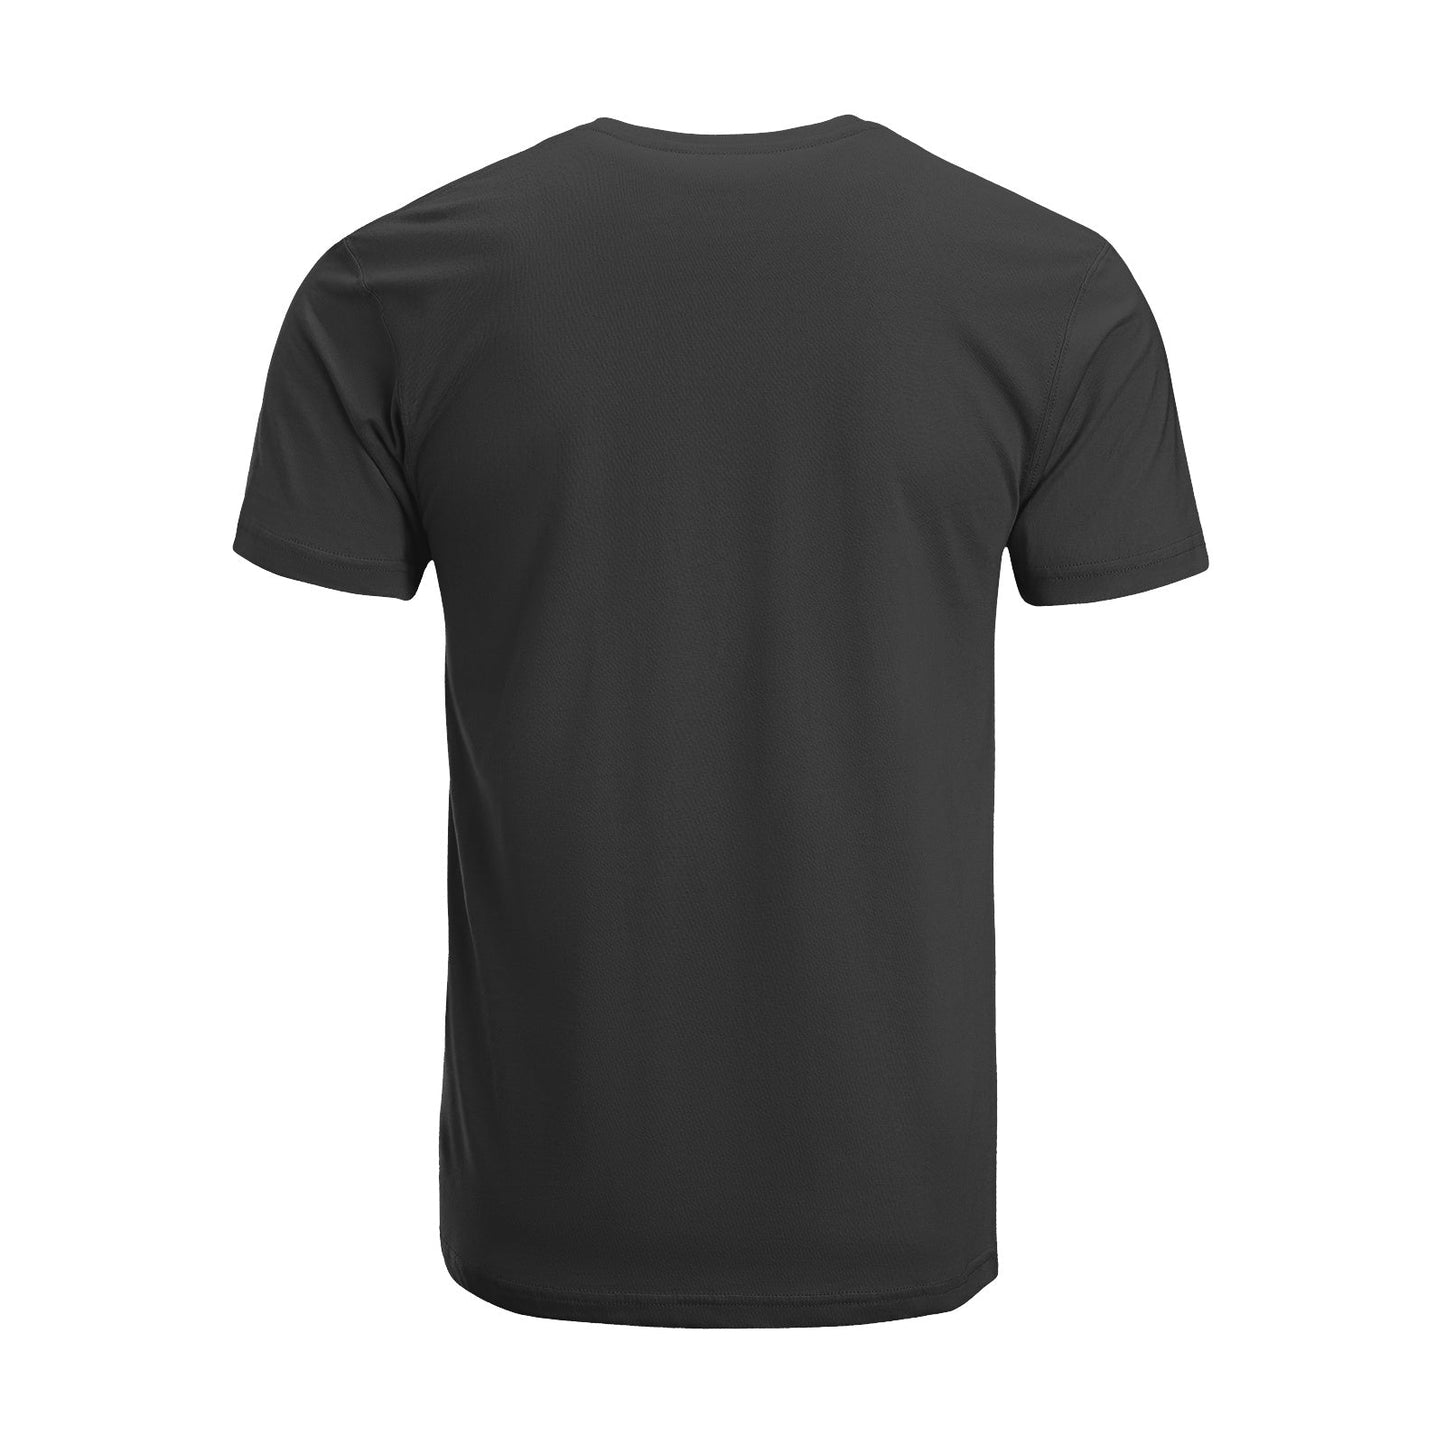 Unisex Short Sleeve Crew Neck Cotton Jersey T-Shirt CAT 45 - Tara-Outfits.com